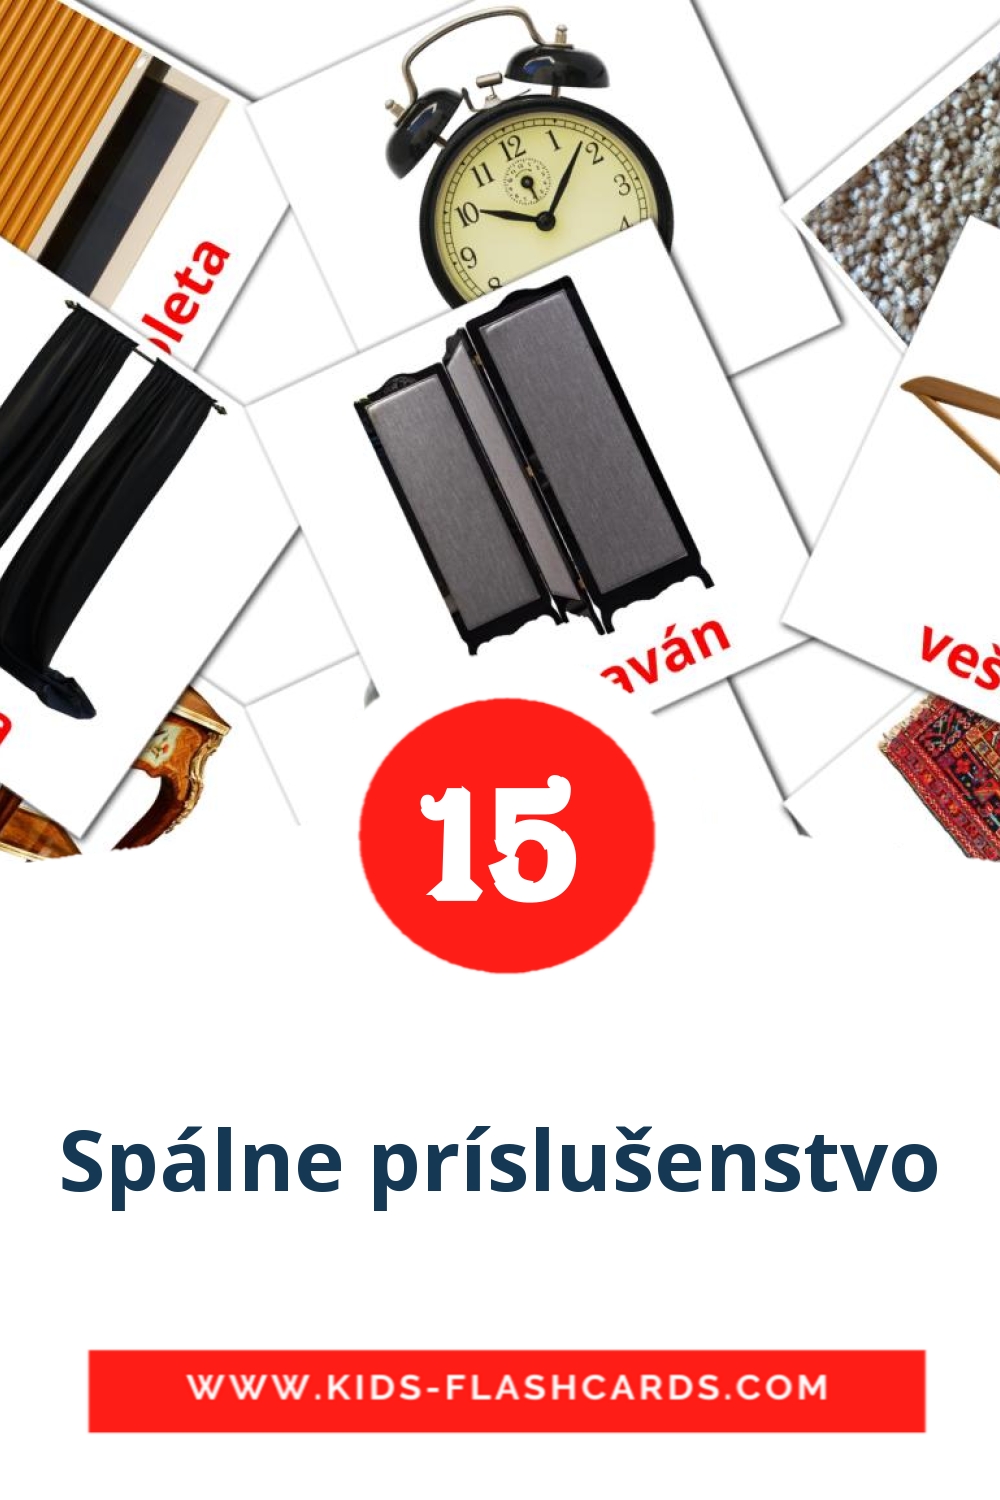 18 Spálne príslušenstvo Picture Cards for Kindergarden in slovak